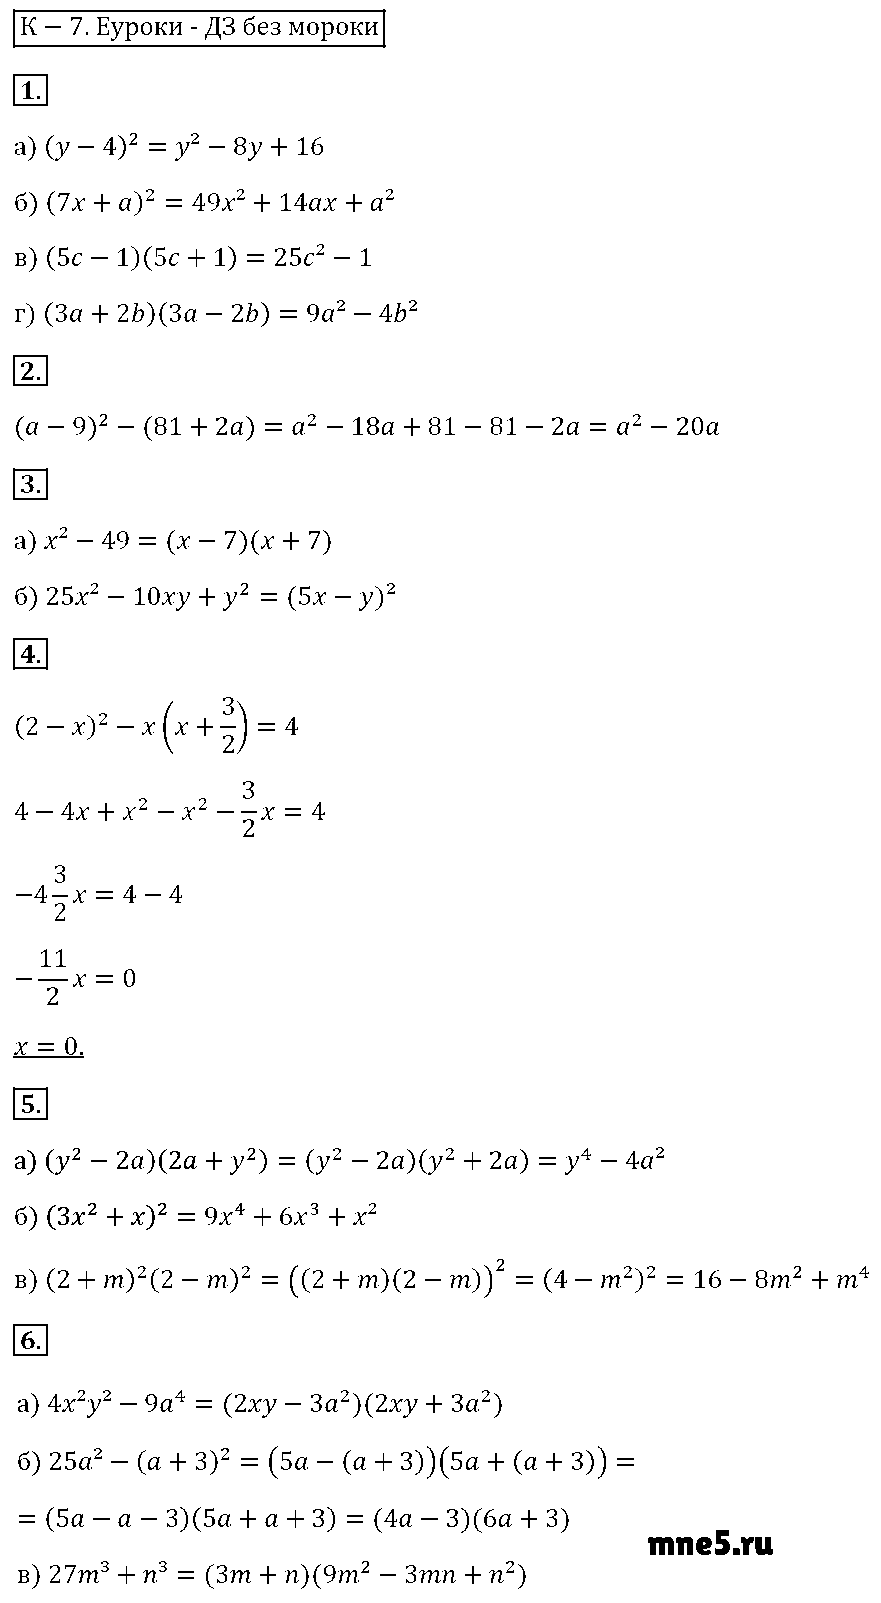 ГДЗ Алгебра 7 класс - К-7